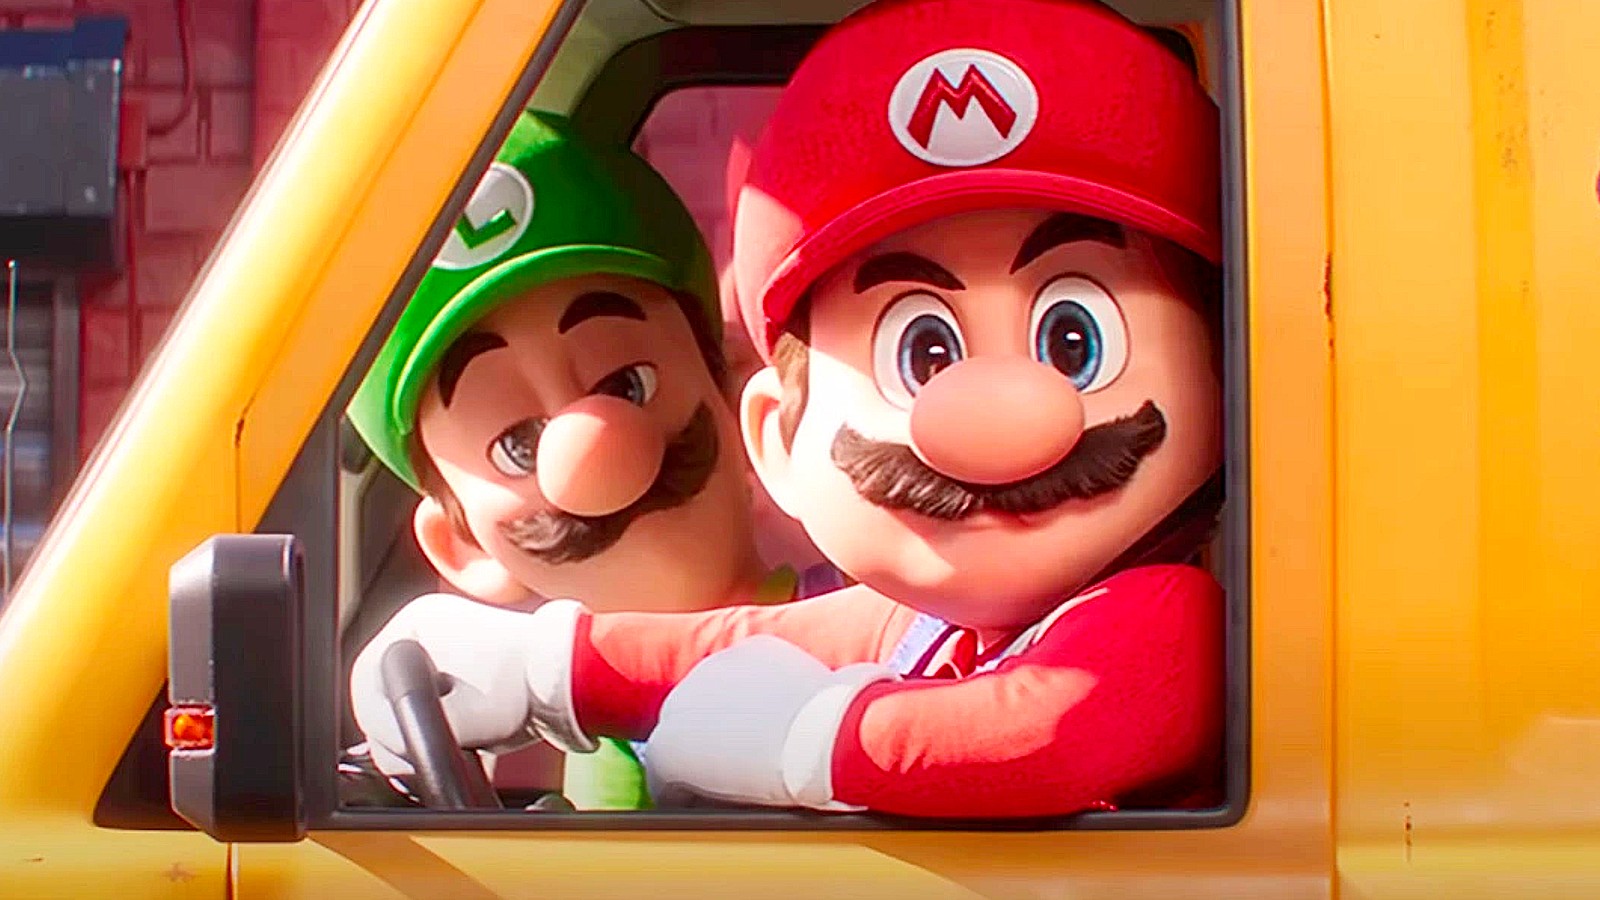 Stream 8K - Super Mario Bros.: A film 2023 Teljes film magyarul by Magyarul  Online